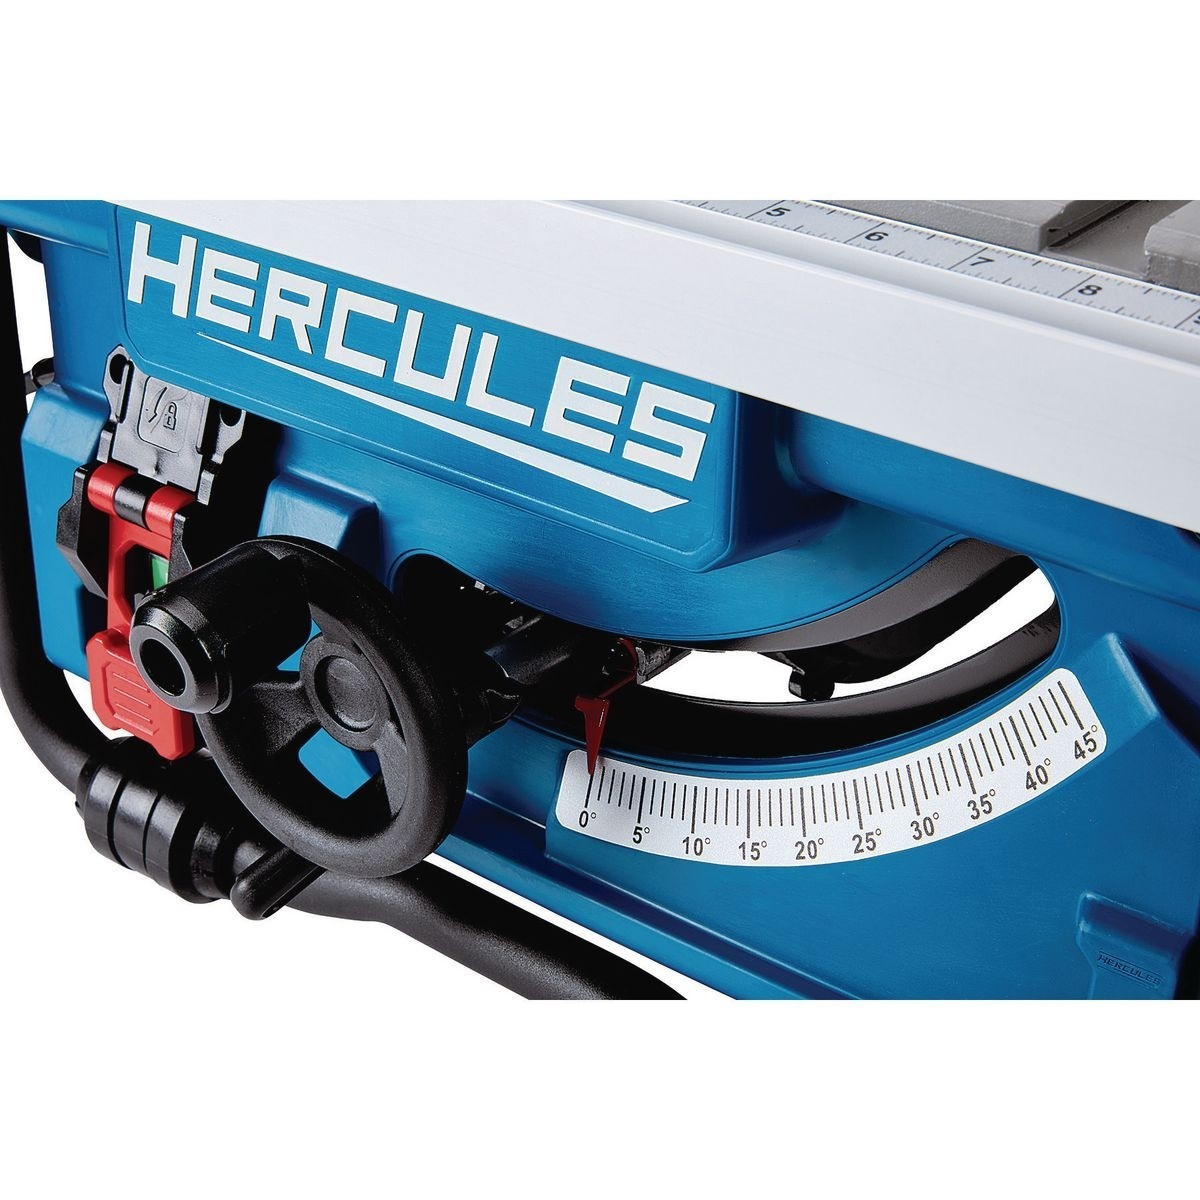 hercules table saw